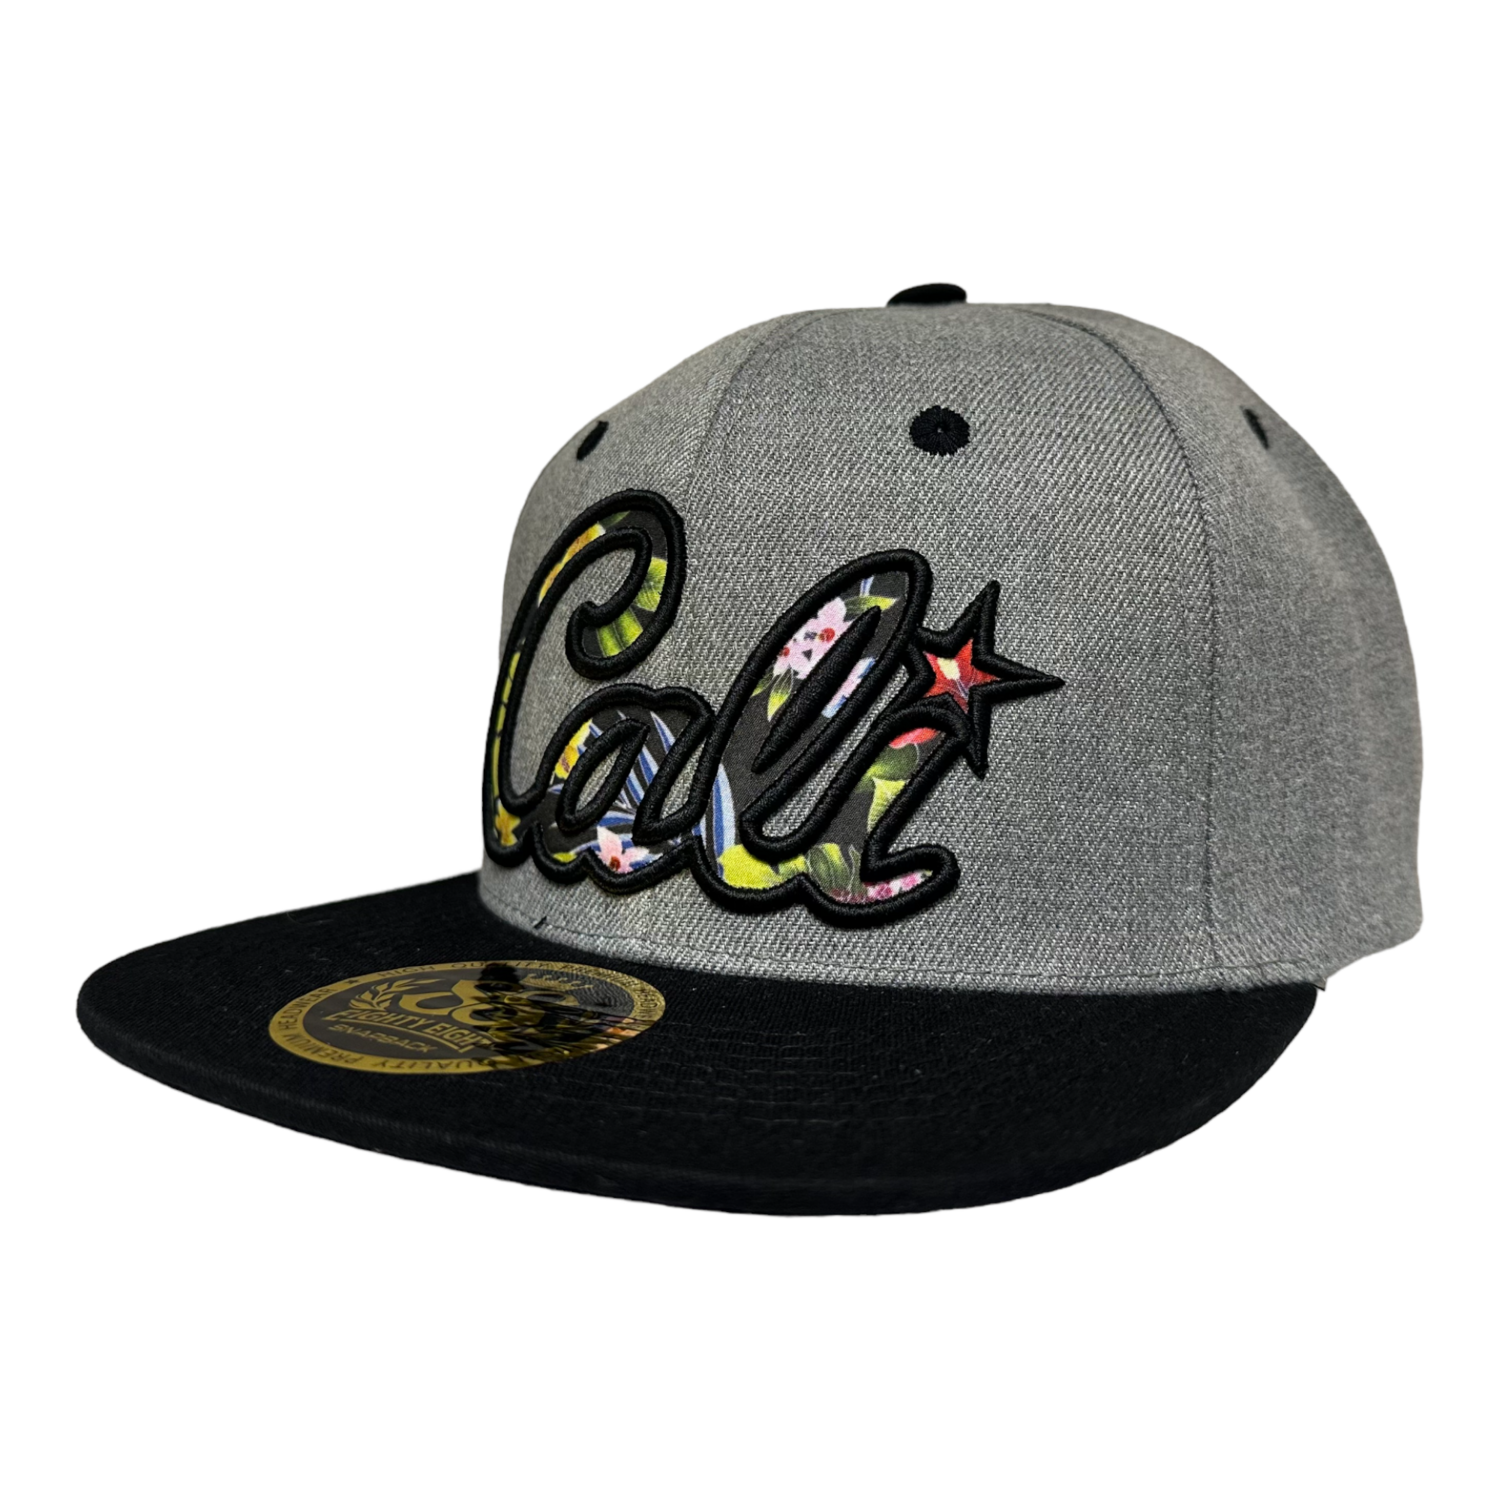 Cali Floral Print Embroidered Snapback 6 Panel Adjustable Snap Fit Hat